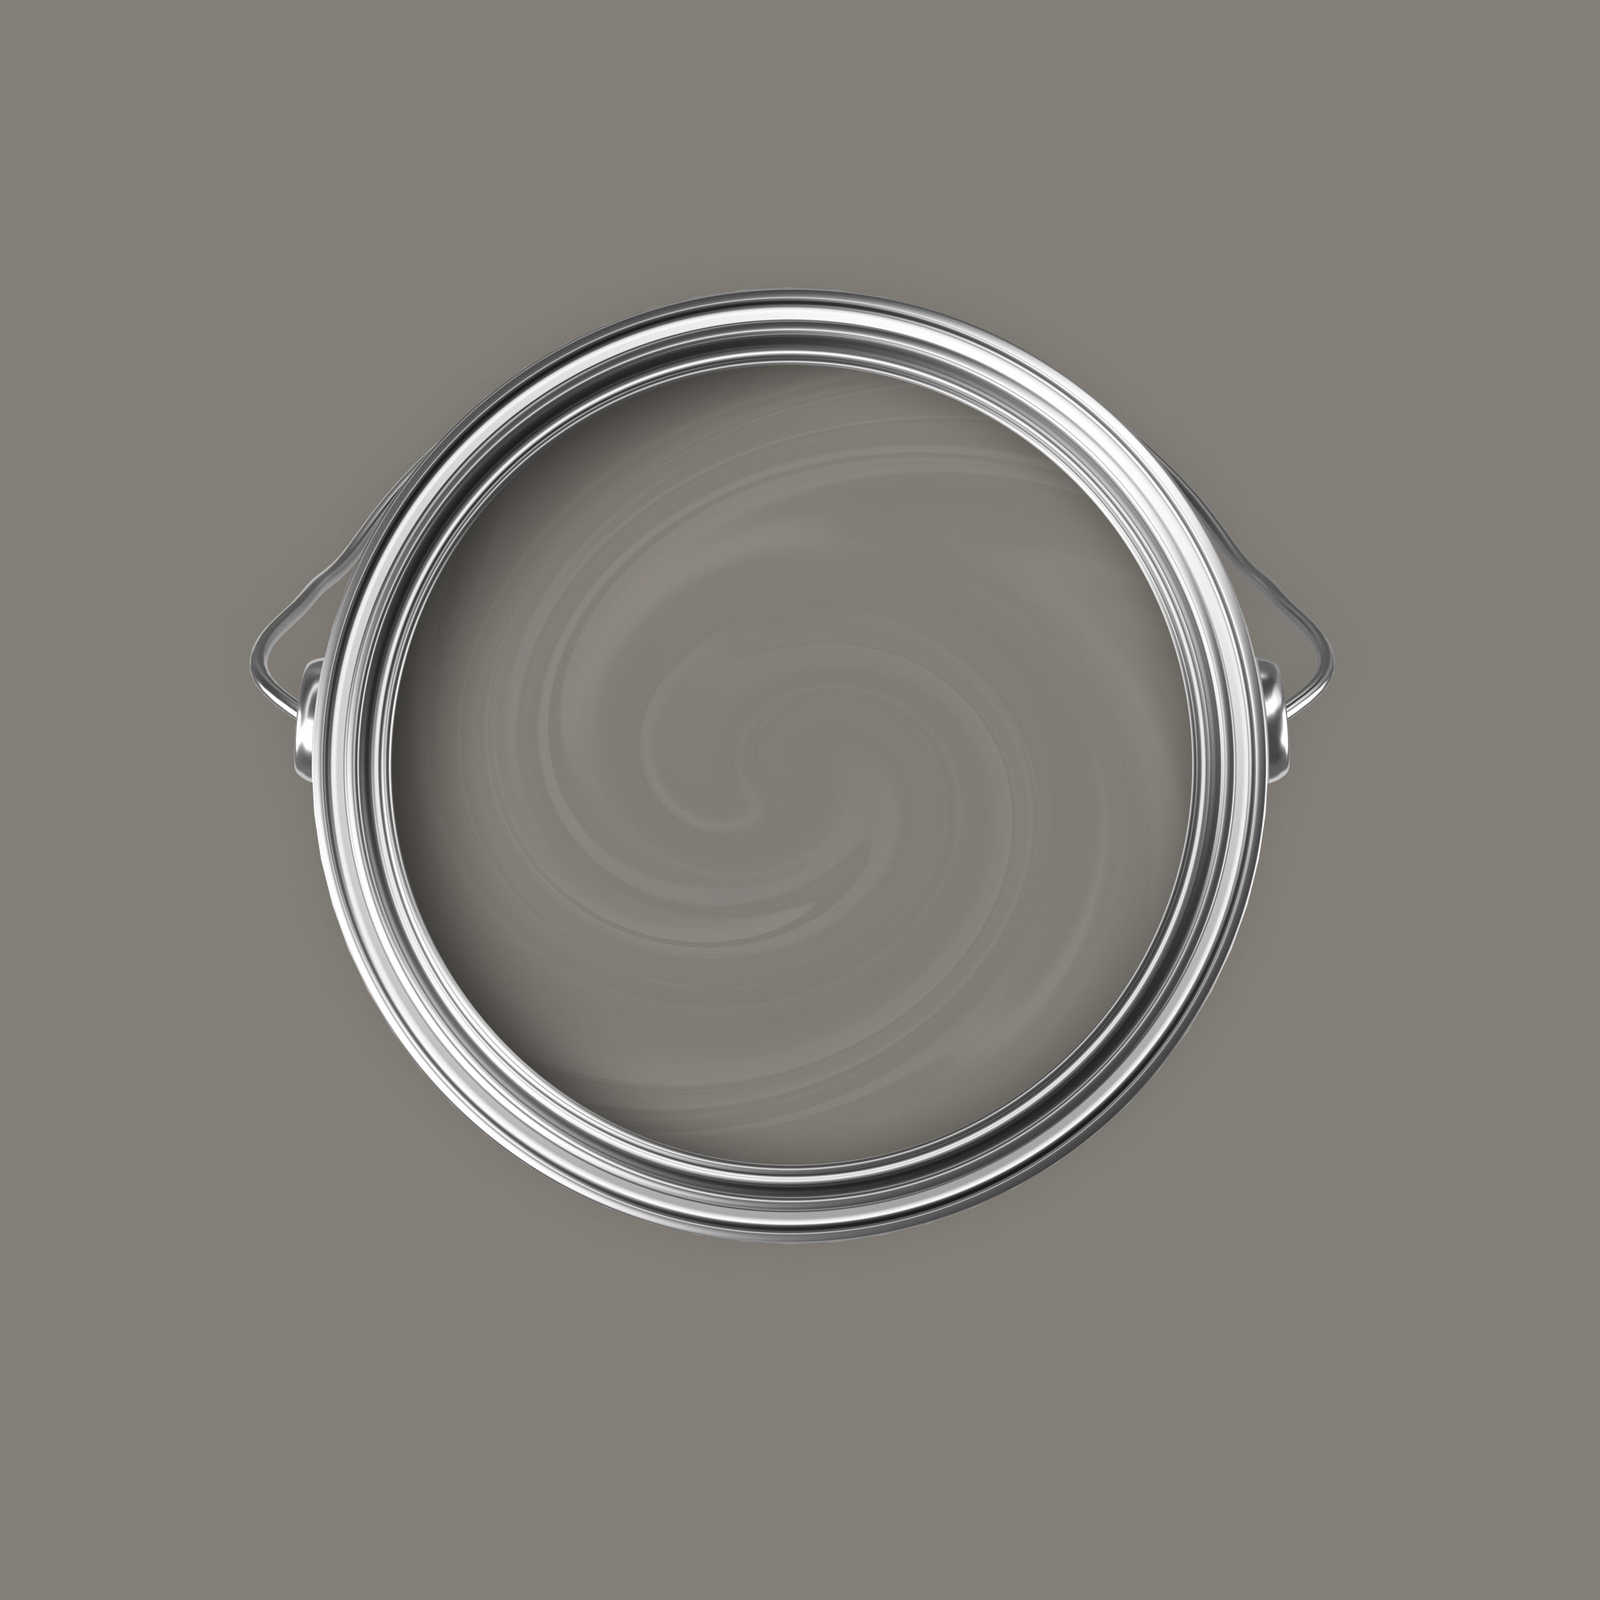             Pintura mural Premium gris hormigón neutro »Creamy Grey« NW112 – 5 litro
        